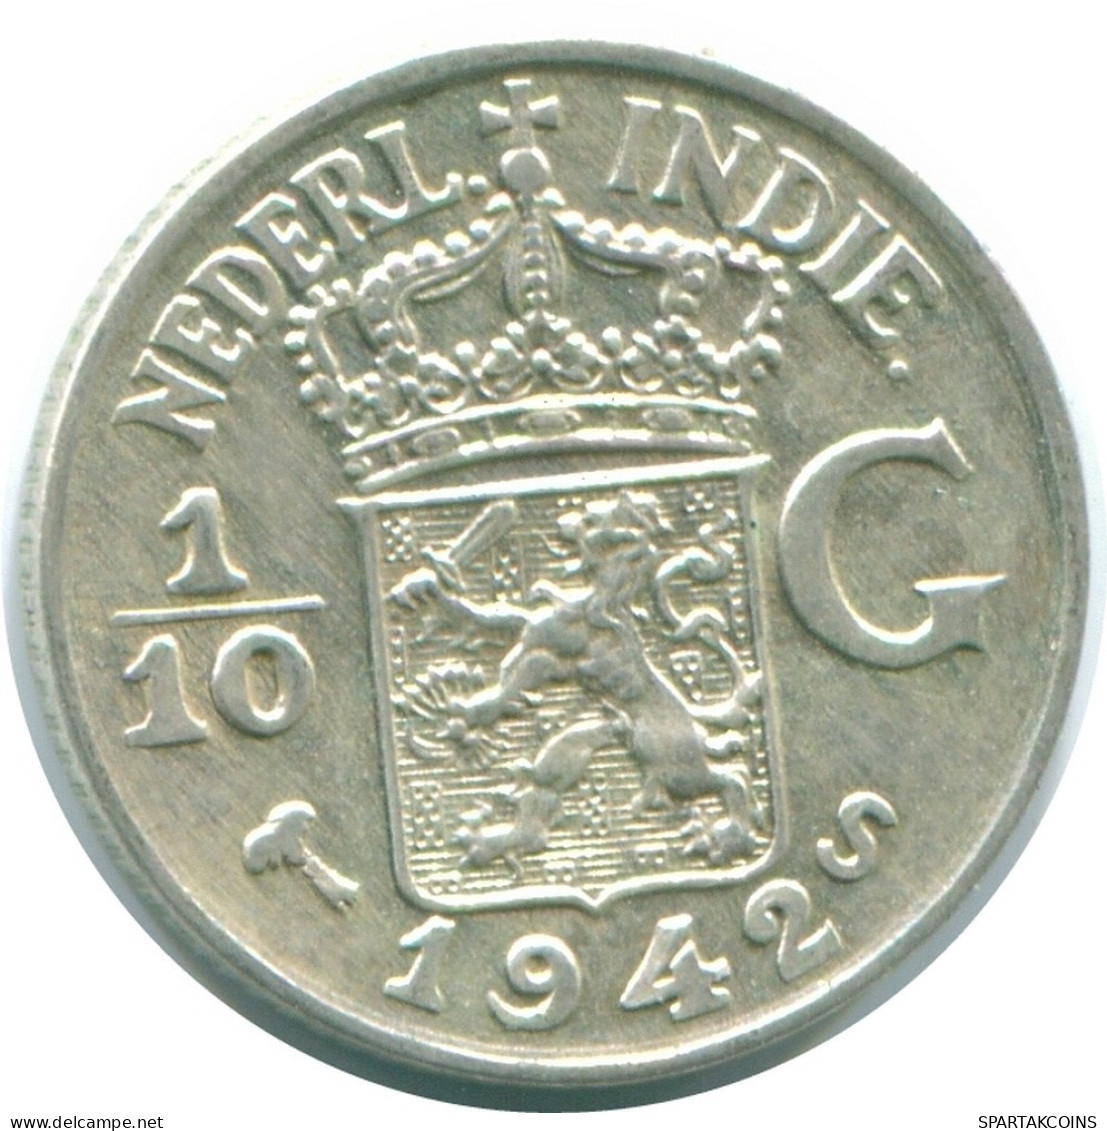 1/10 GULDEN 1942 NETHERLANDS EAST INDIES SILVER Colonial Coin #NL13891.3.U.A - Nederlands-Indië